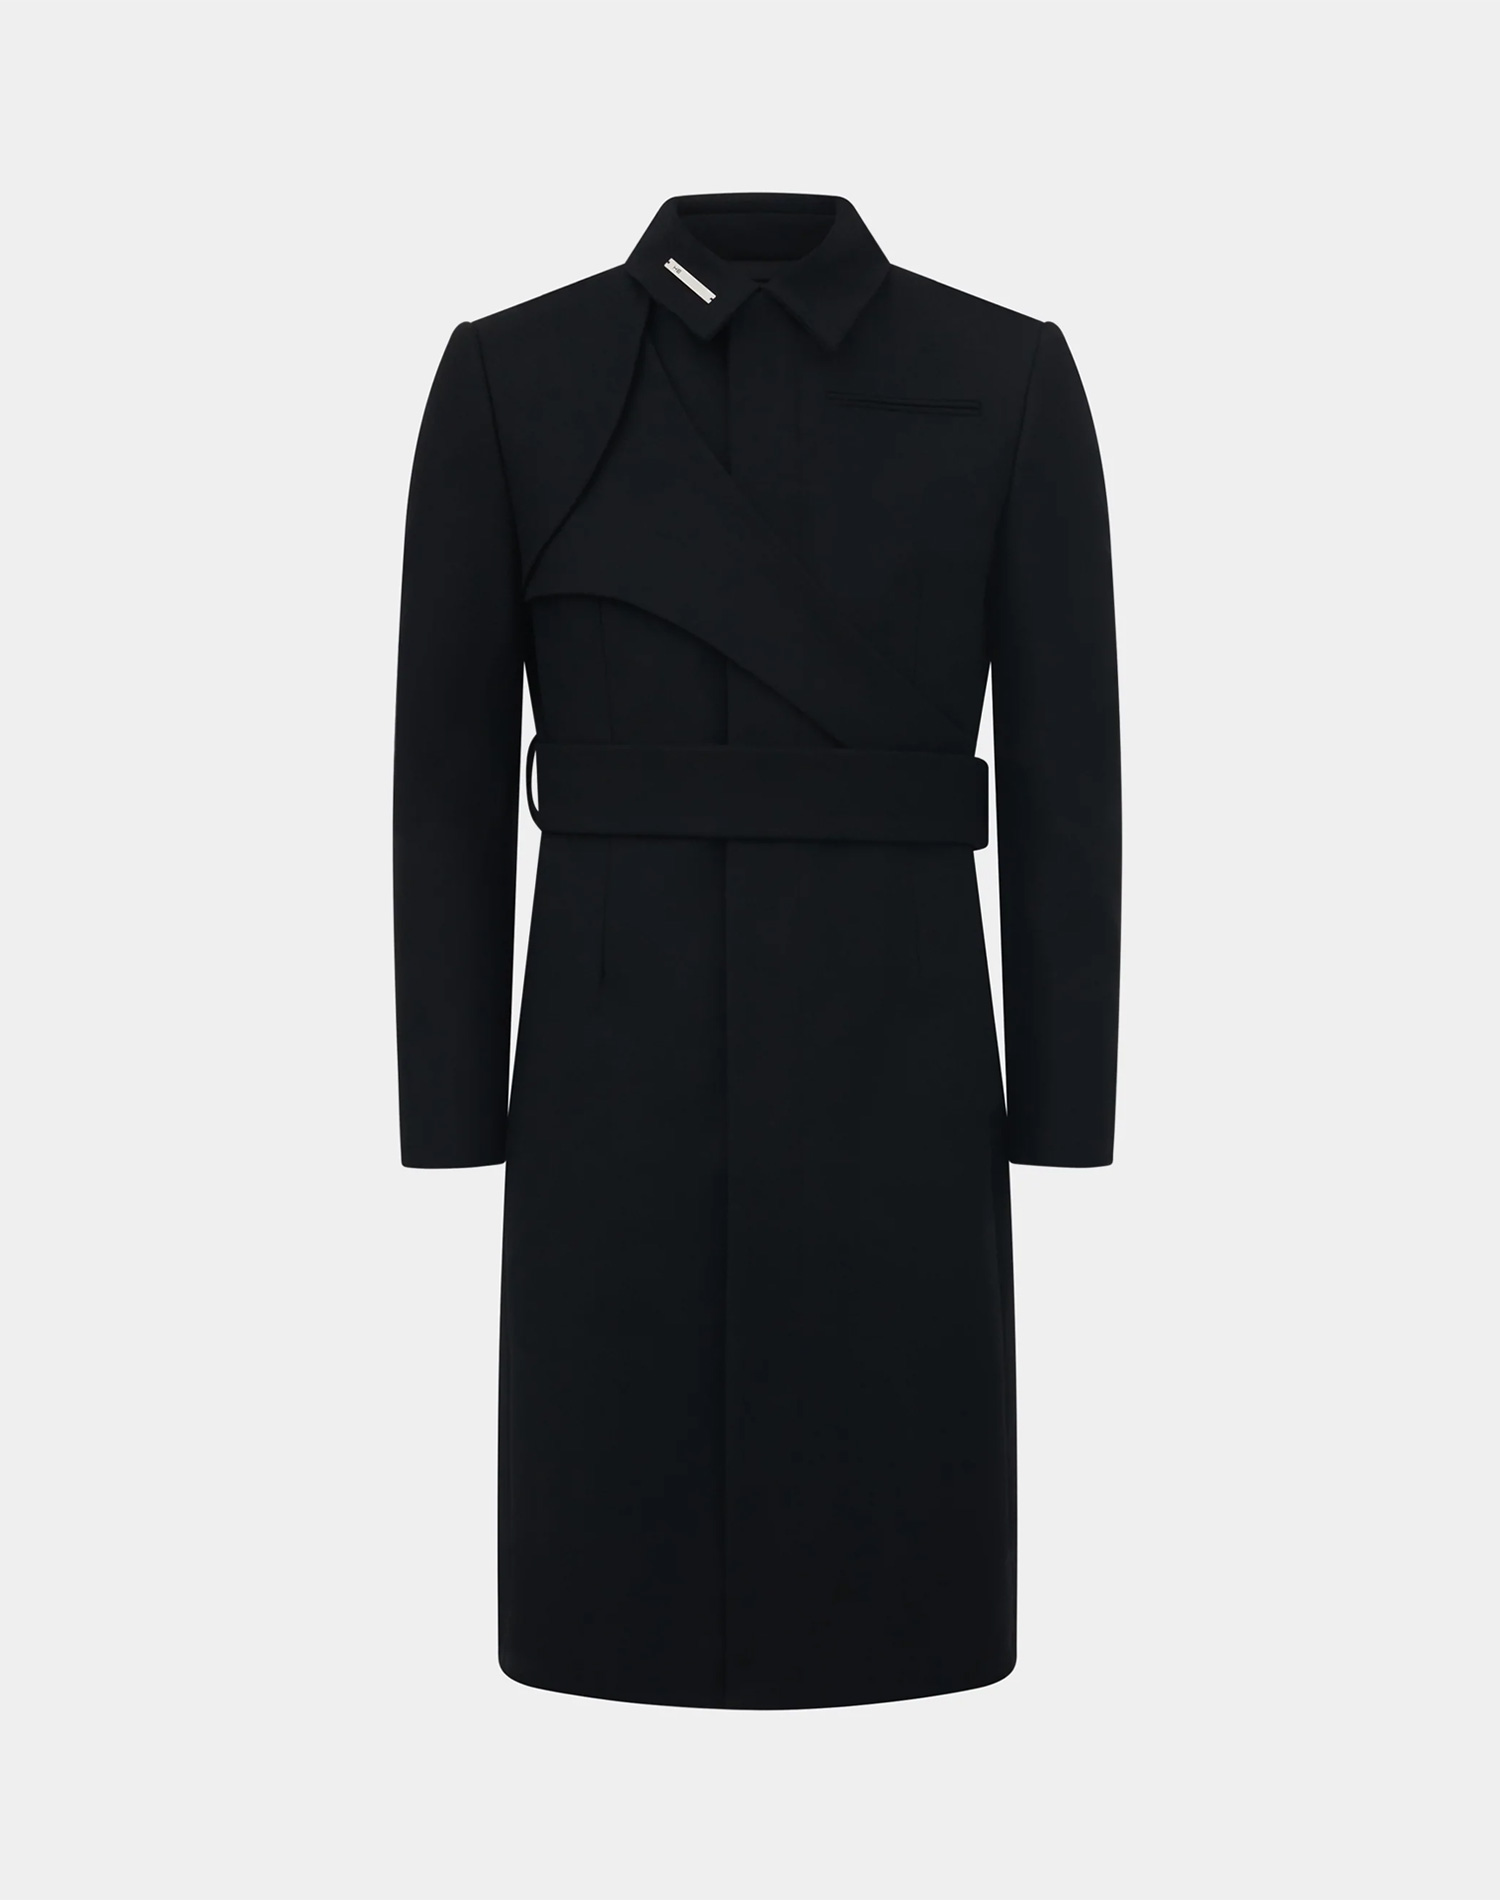 Black cutting coat